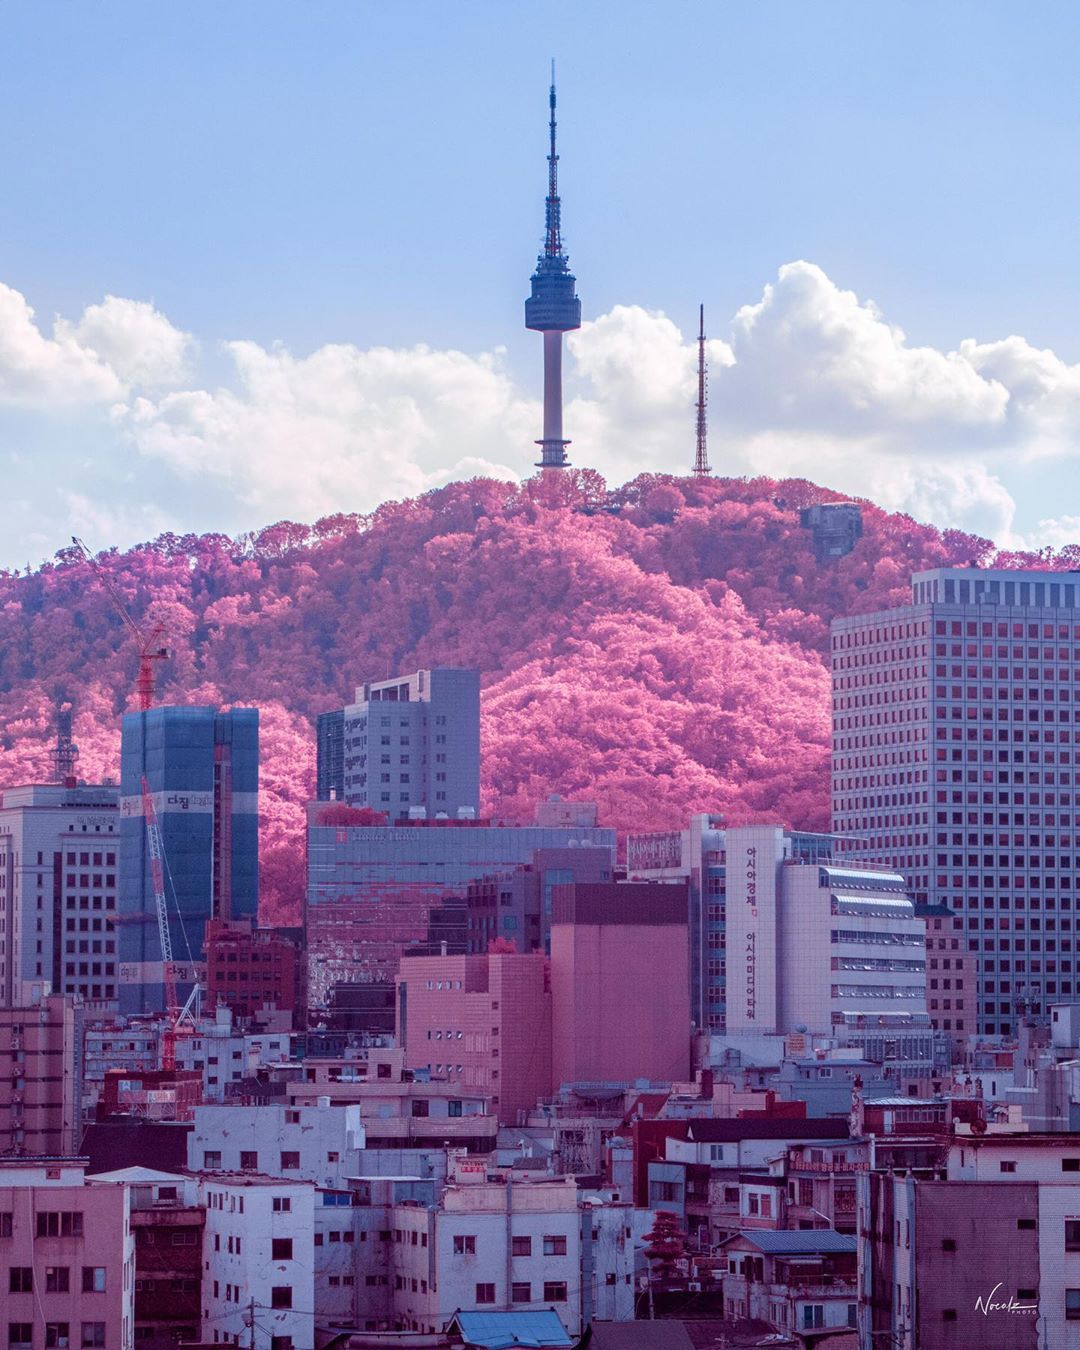 Likes, 44 Comments / Cyberpunk / Anime on Instagram: “Namsan tower, Seoul, Korea. C. Fotografi kota, Fotografi minimalis, Foto wisata